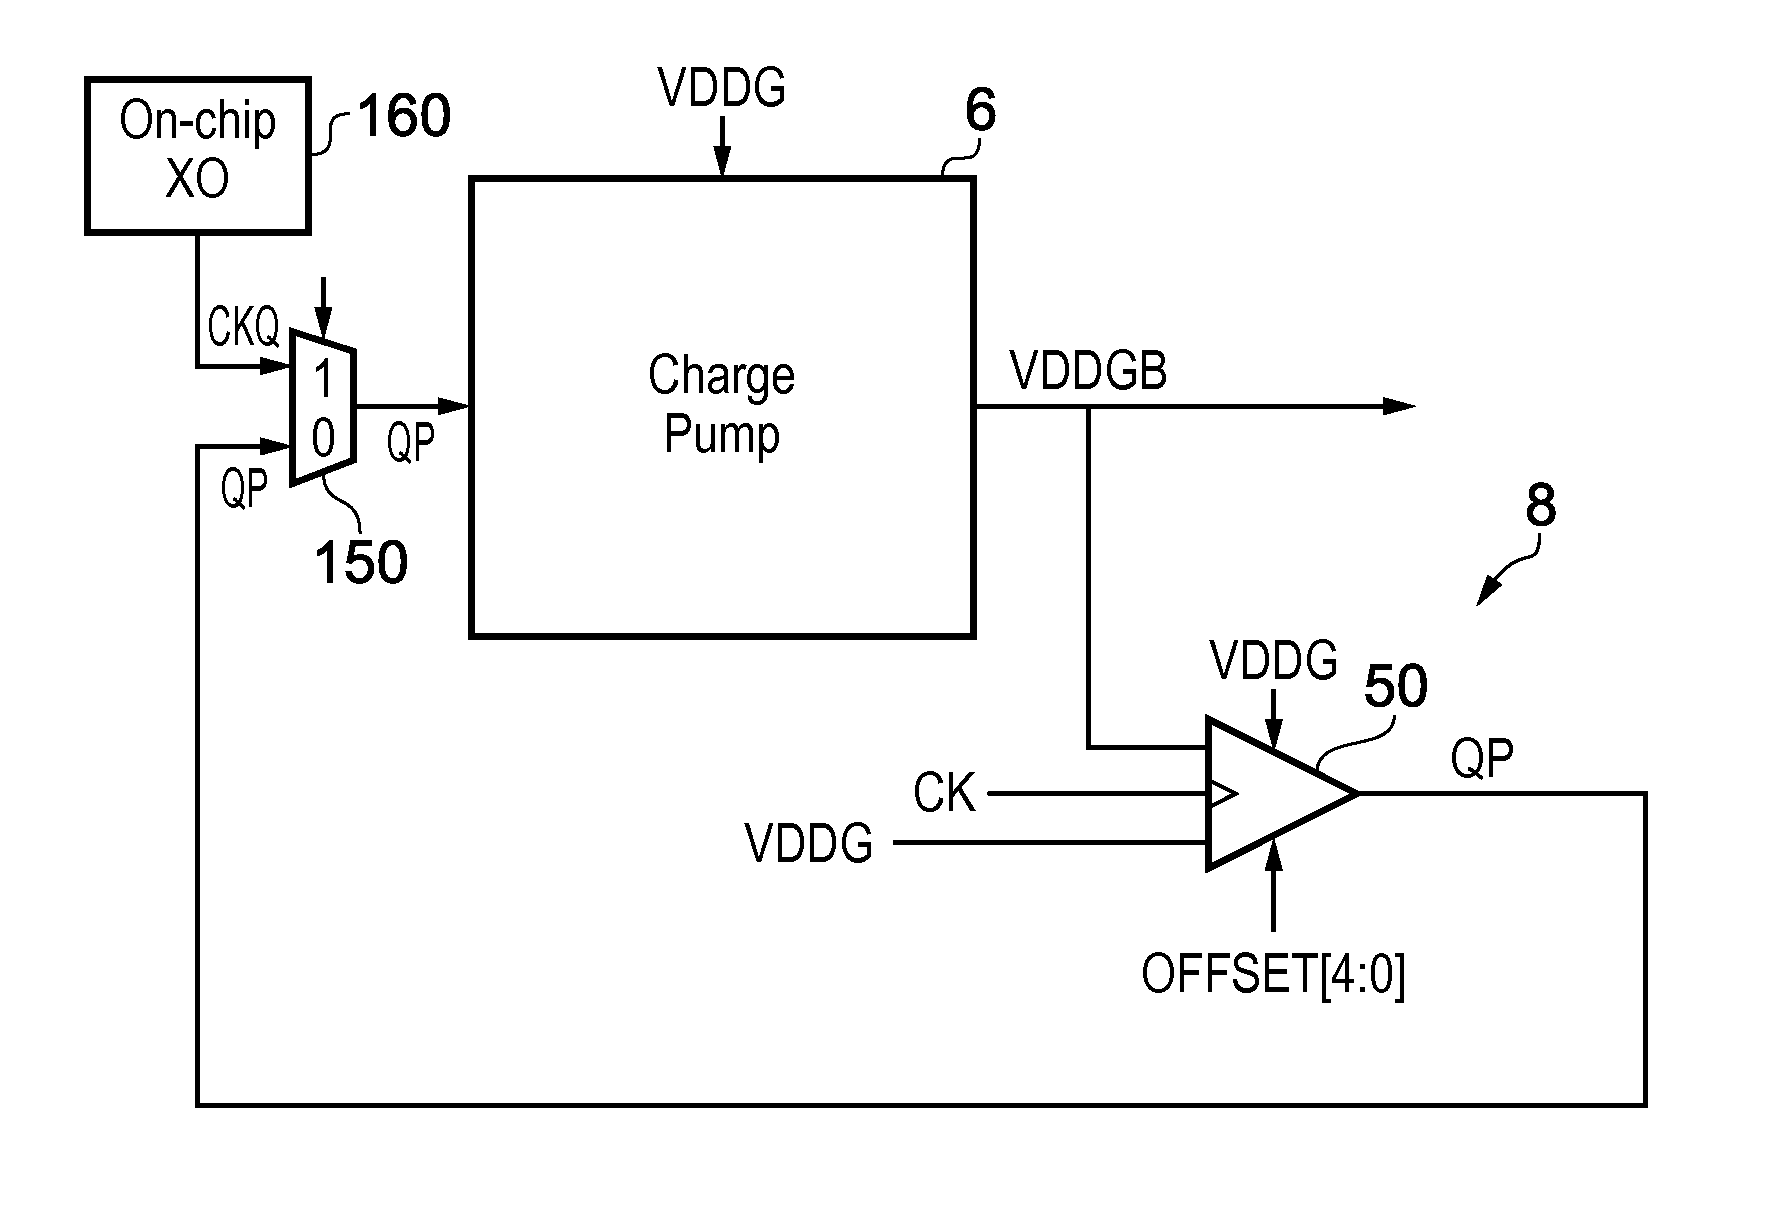 Controlling voltage generation and voltage comparison